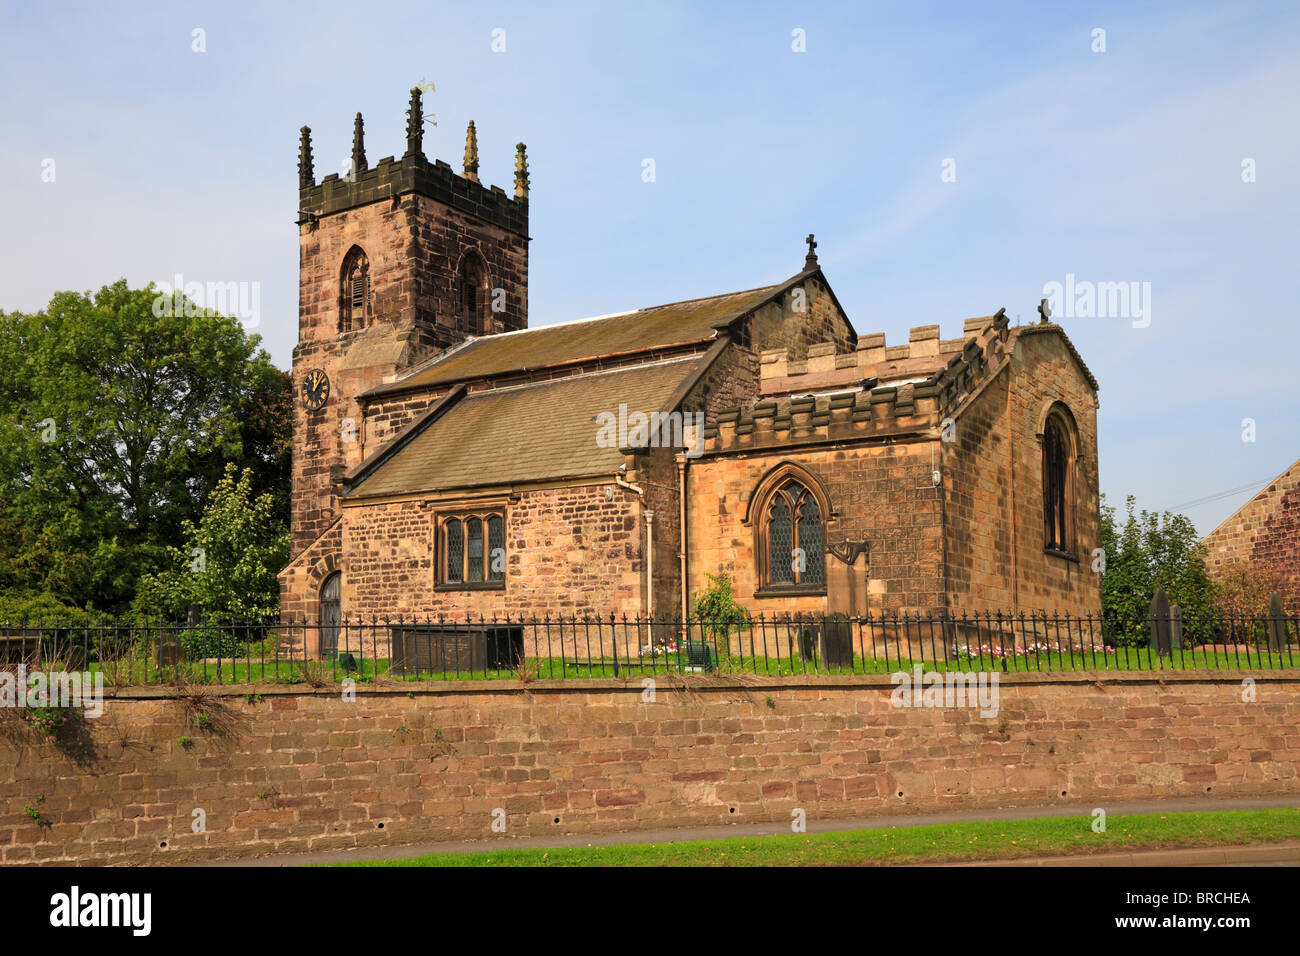 L'église Saint John's, Hooton Roberts, Rotherham, South Yorkshire, Angleterre, Royaume-Uni. Banque D'Images